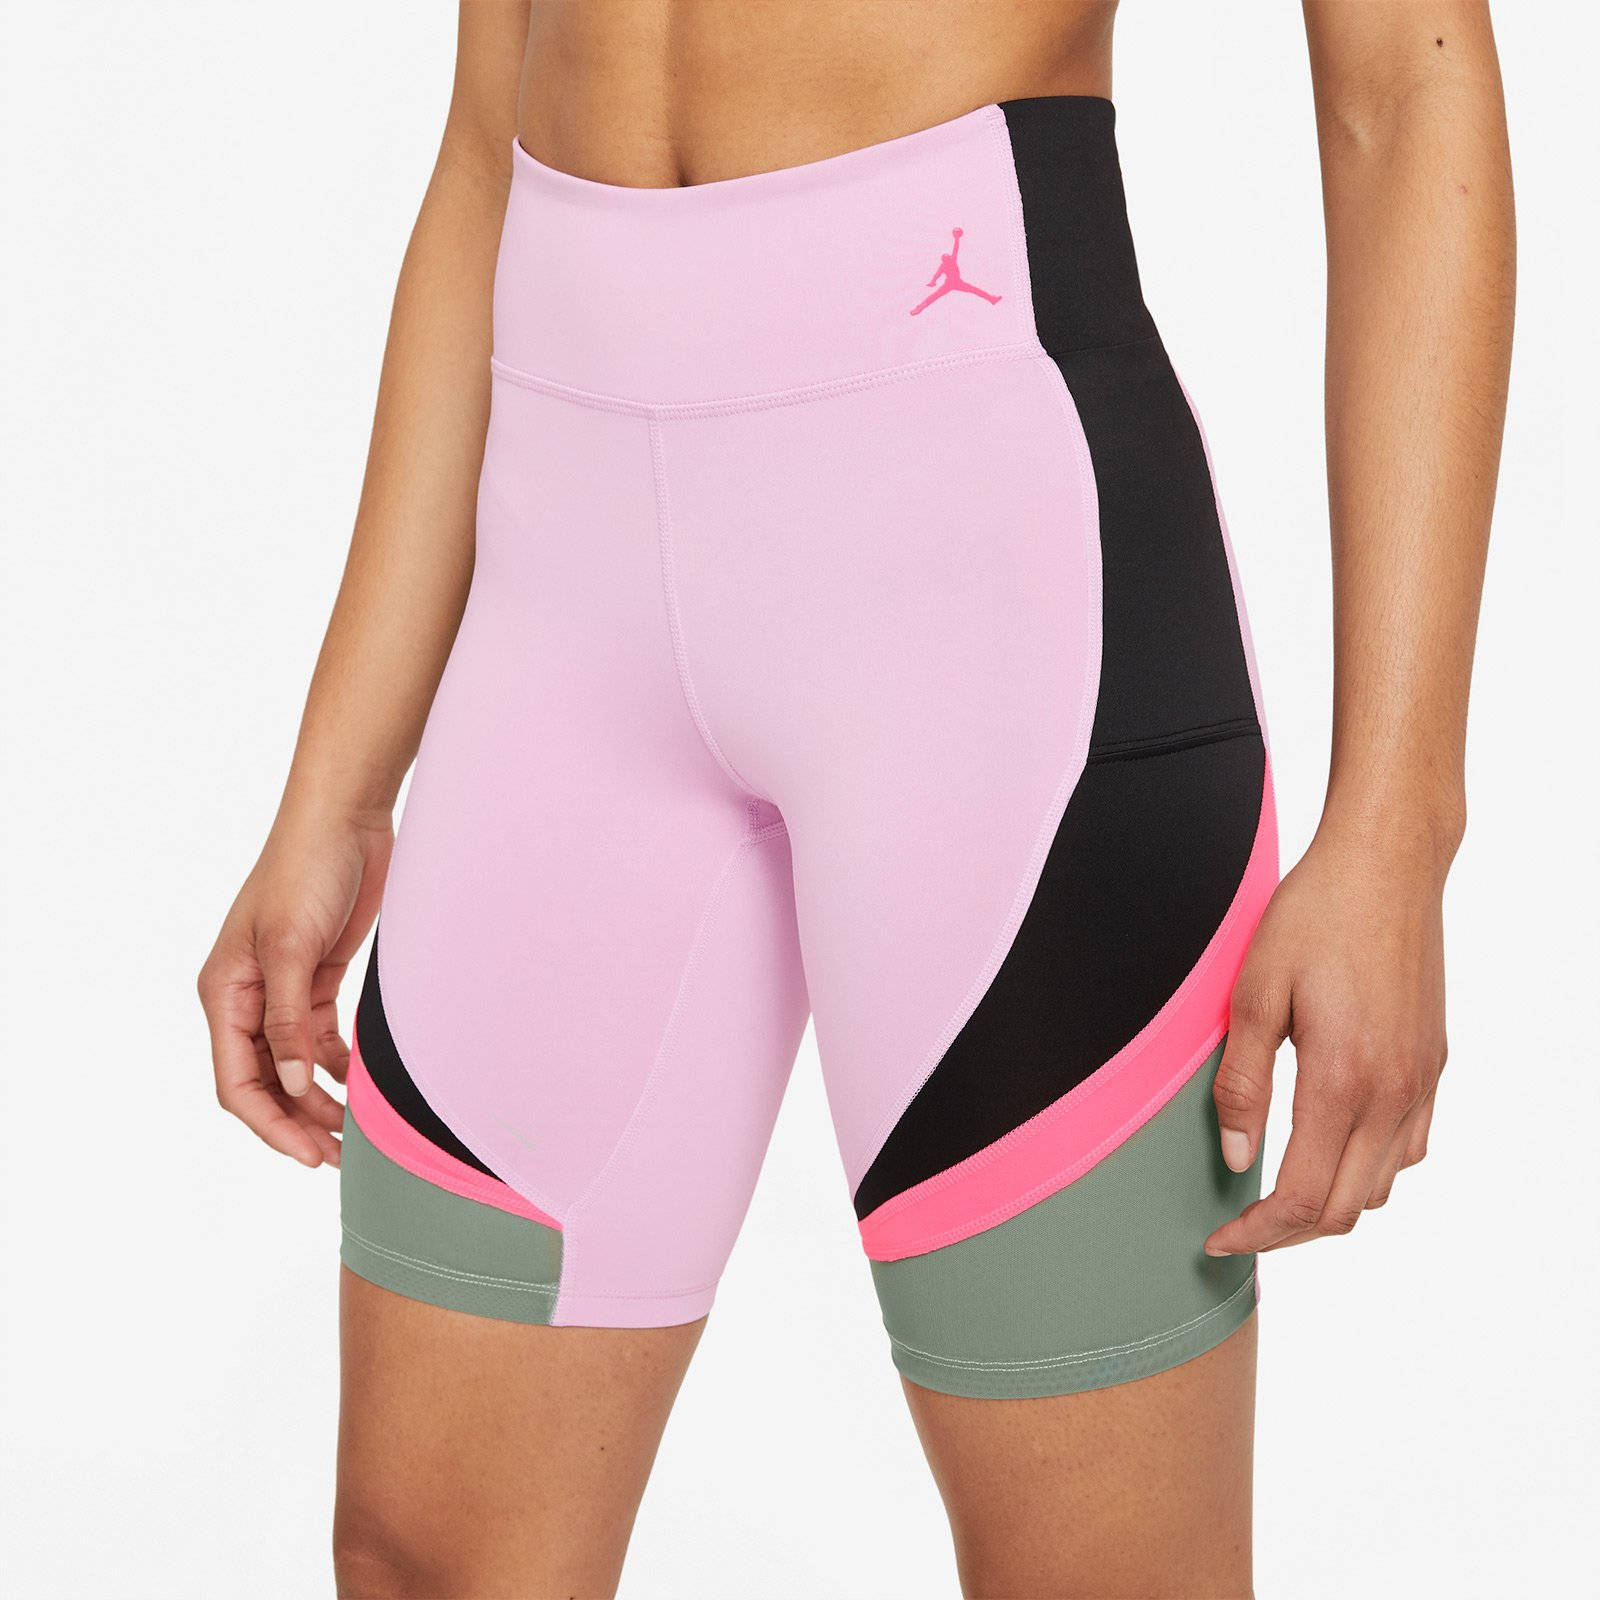 Jordan Heatwave Bike Shorts - Arctic Pink | The Sole Supplier